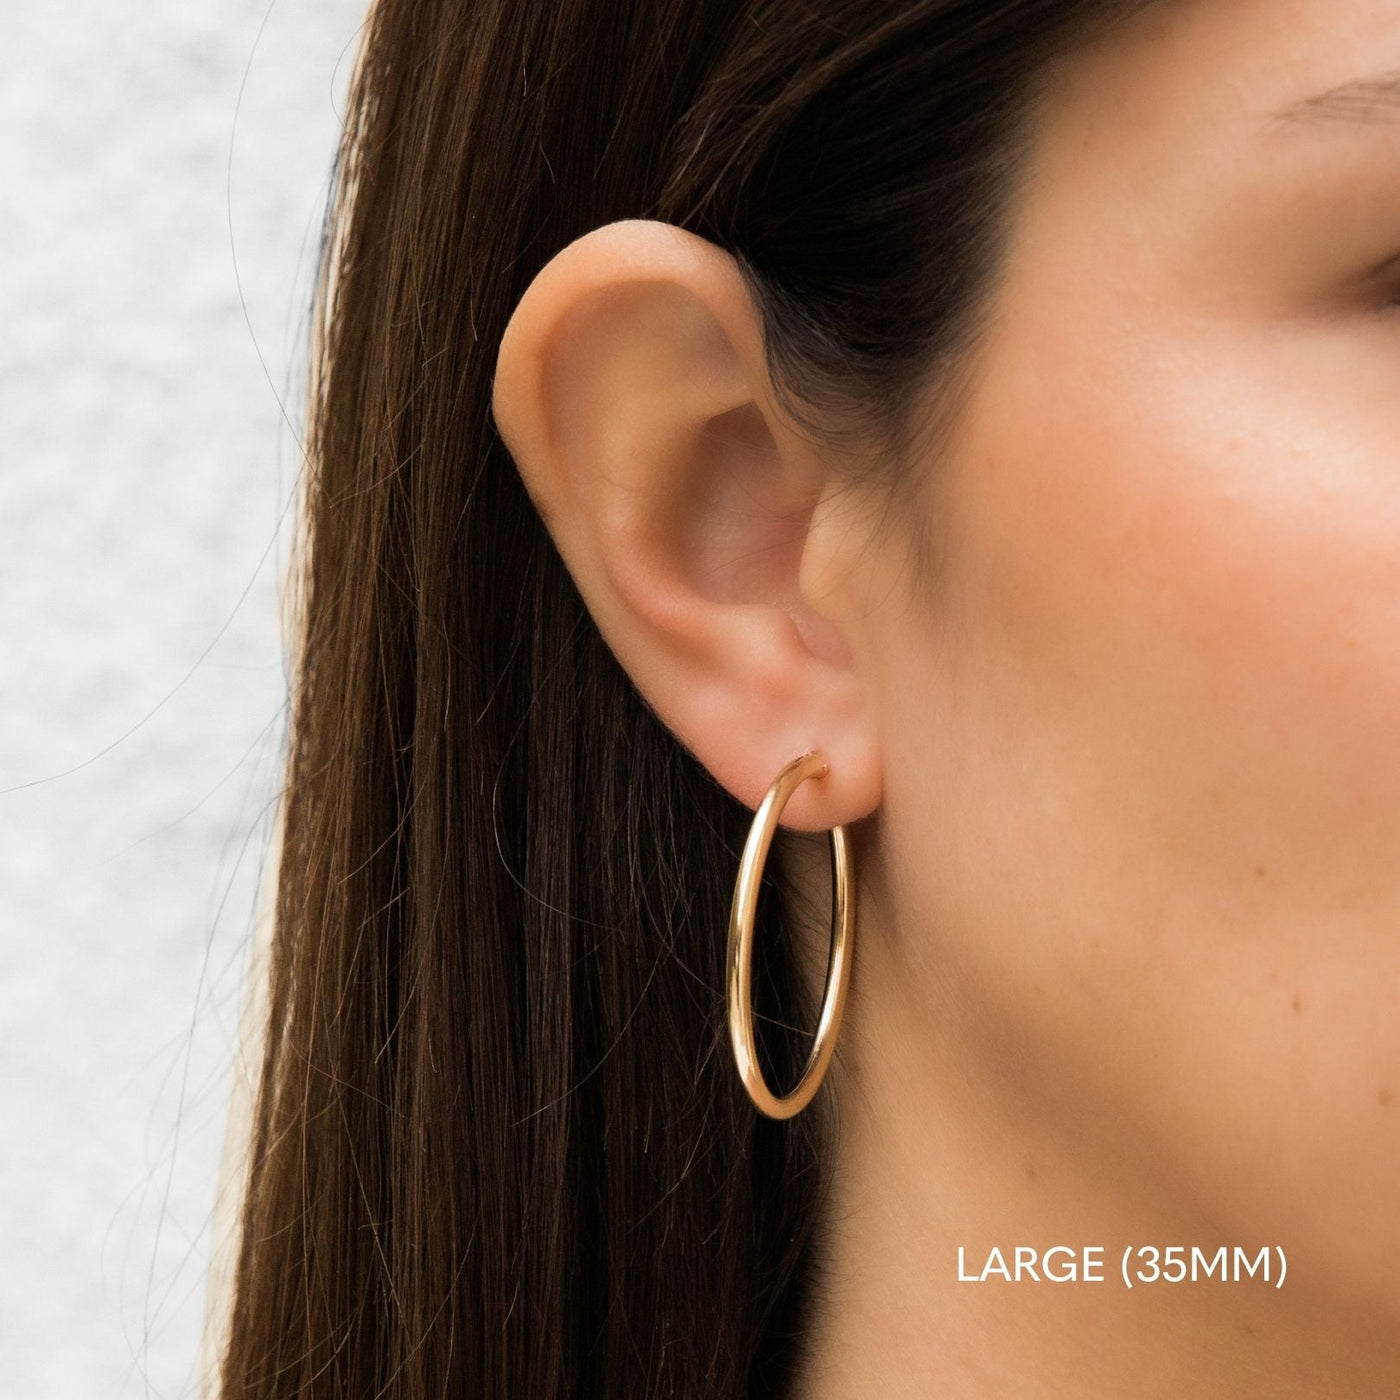 Large (35mm) Everyday Hoop Earrings by Simple & Dainty Jewelry